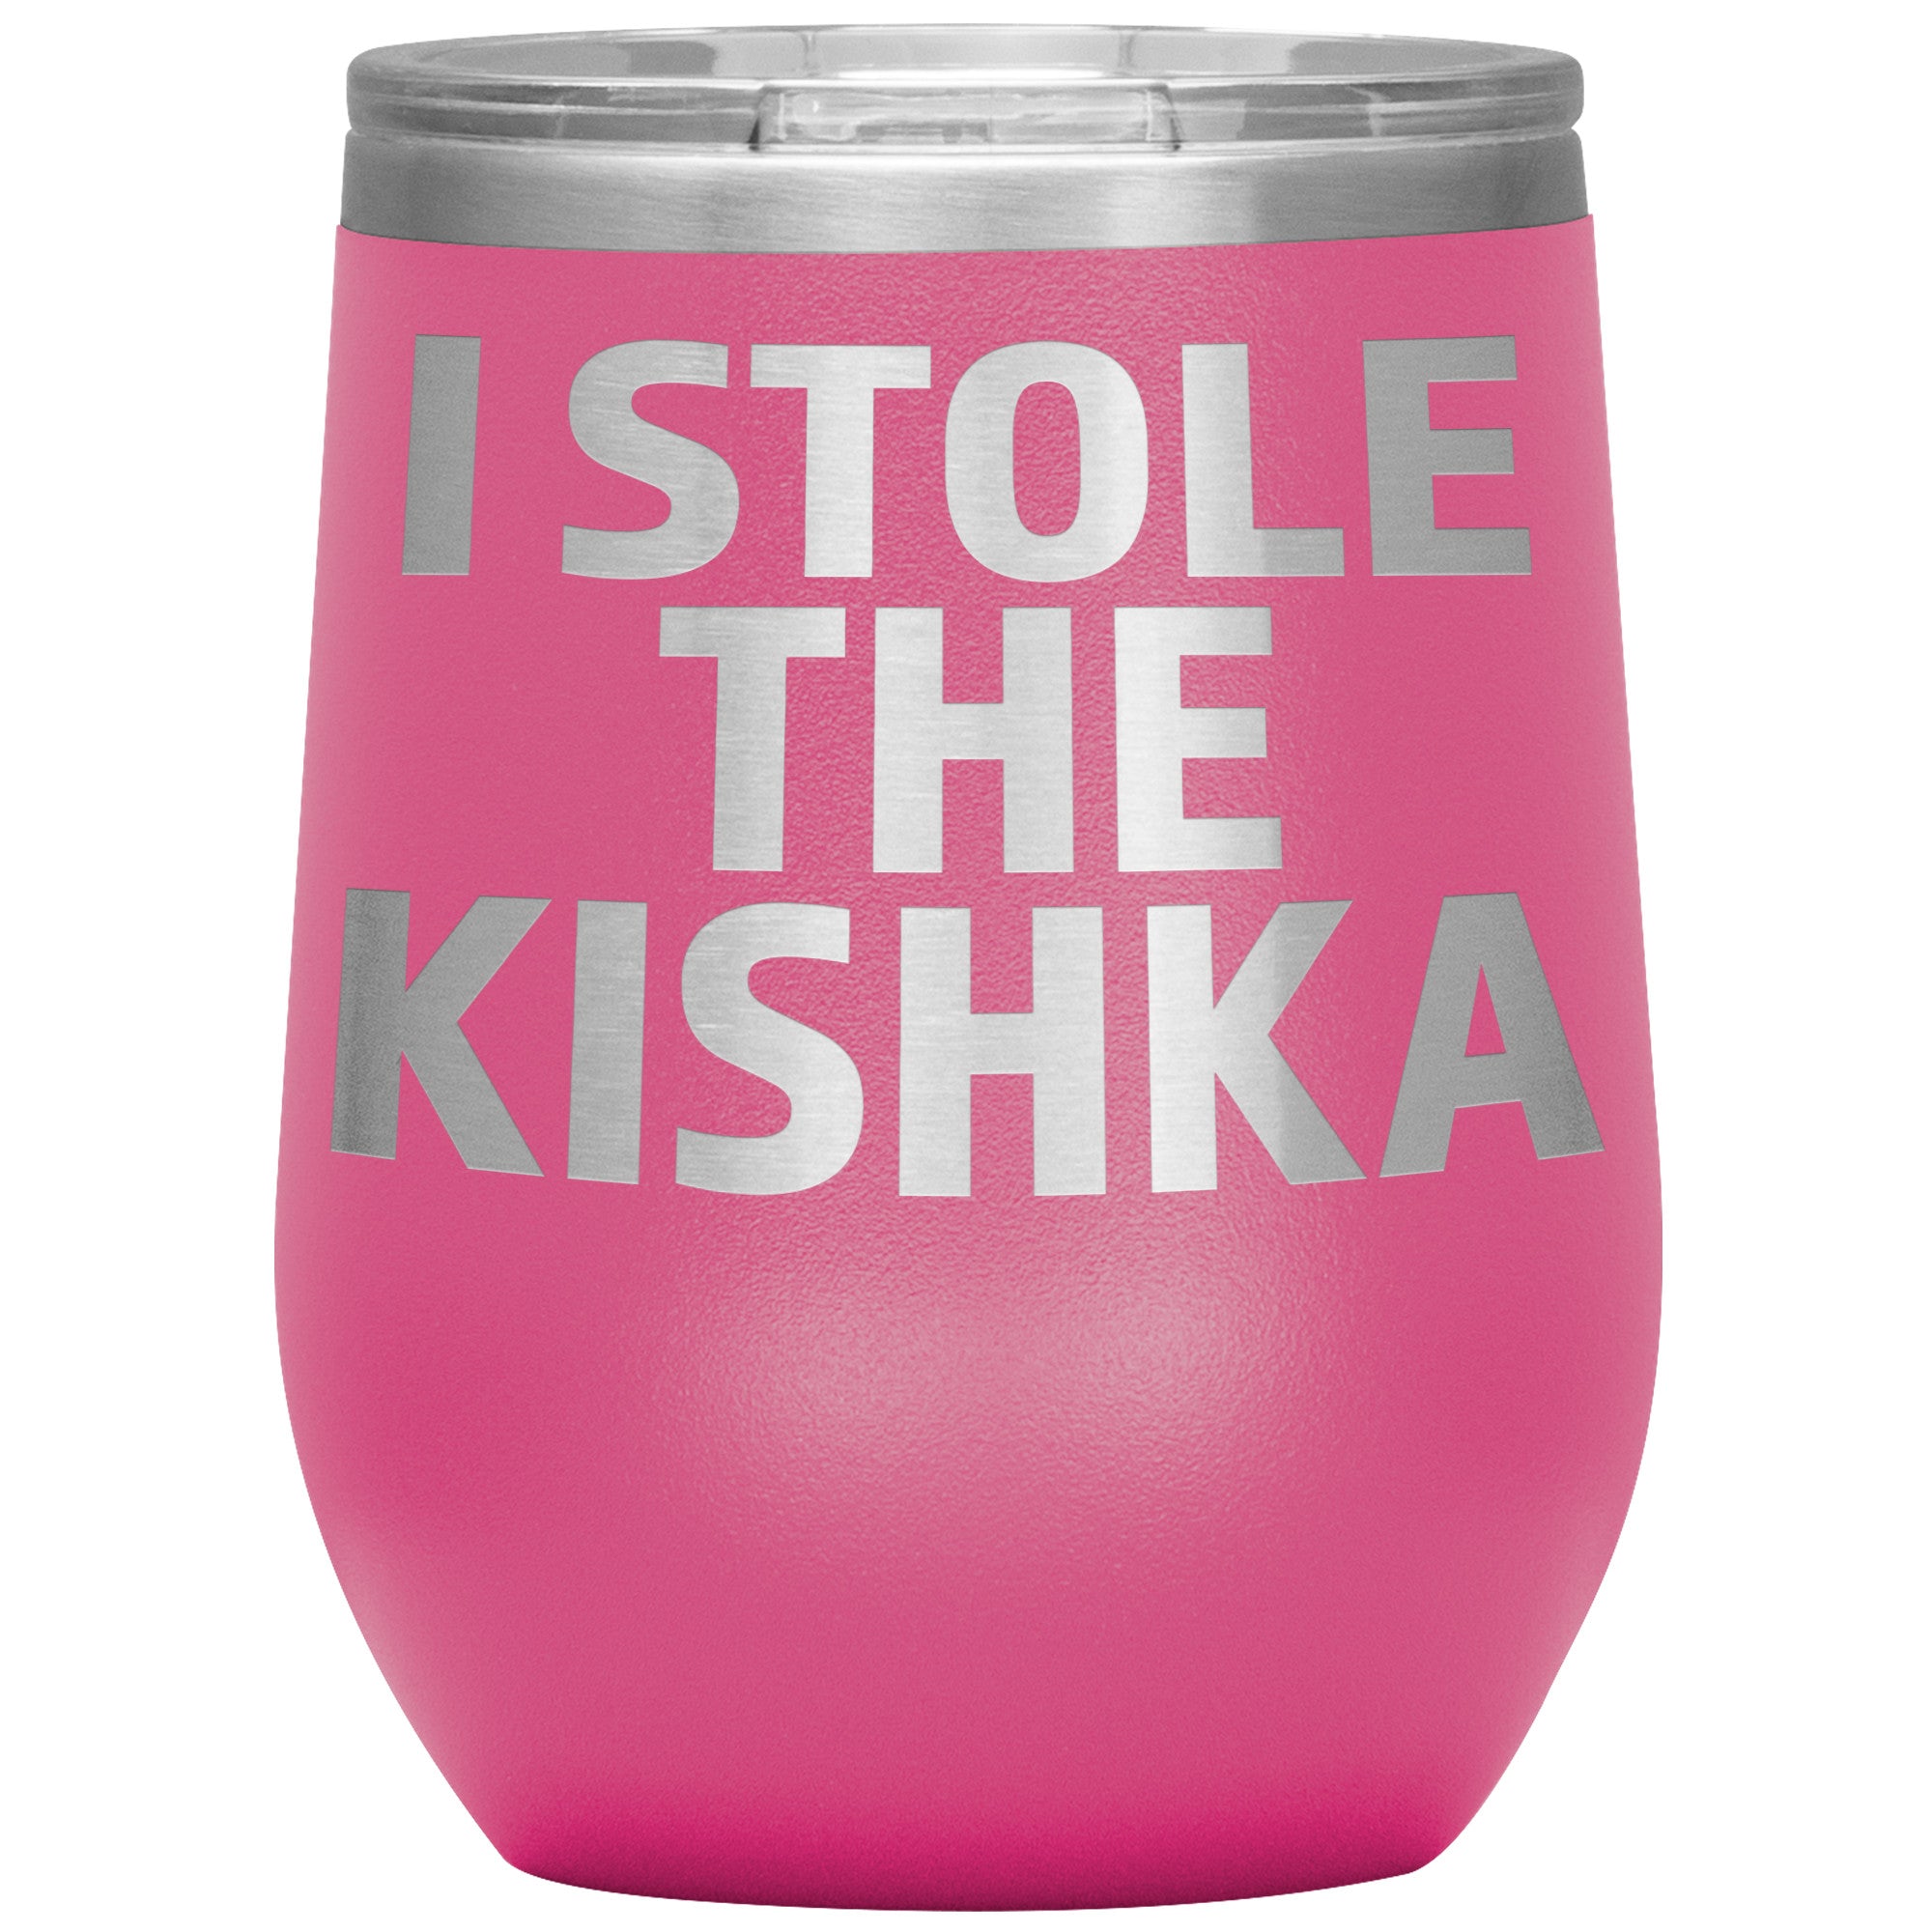 I Stole The Kishka Insulated Wine Tumbler Tumblers teelaunch Pink  